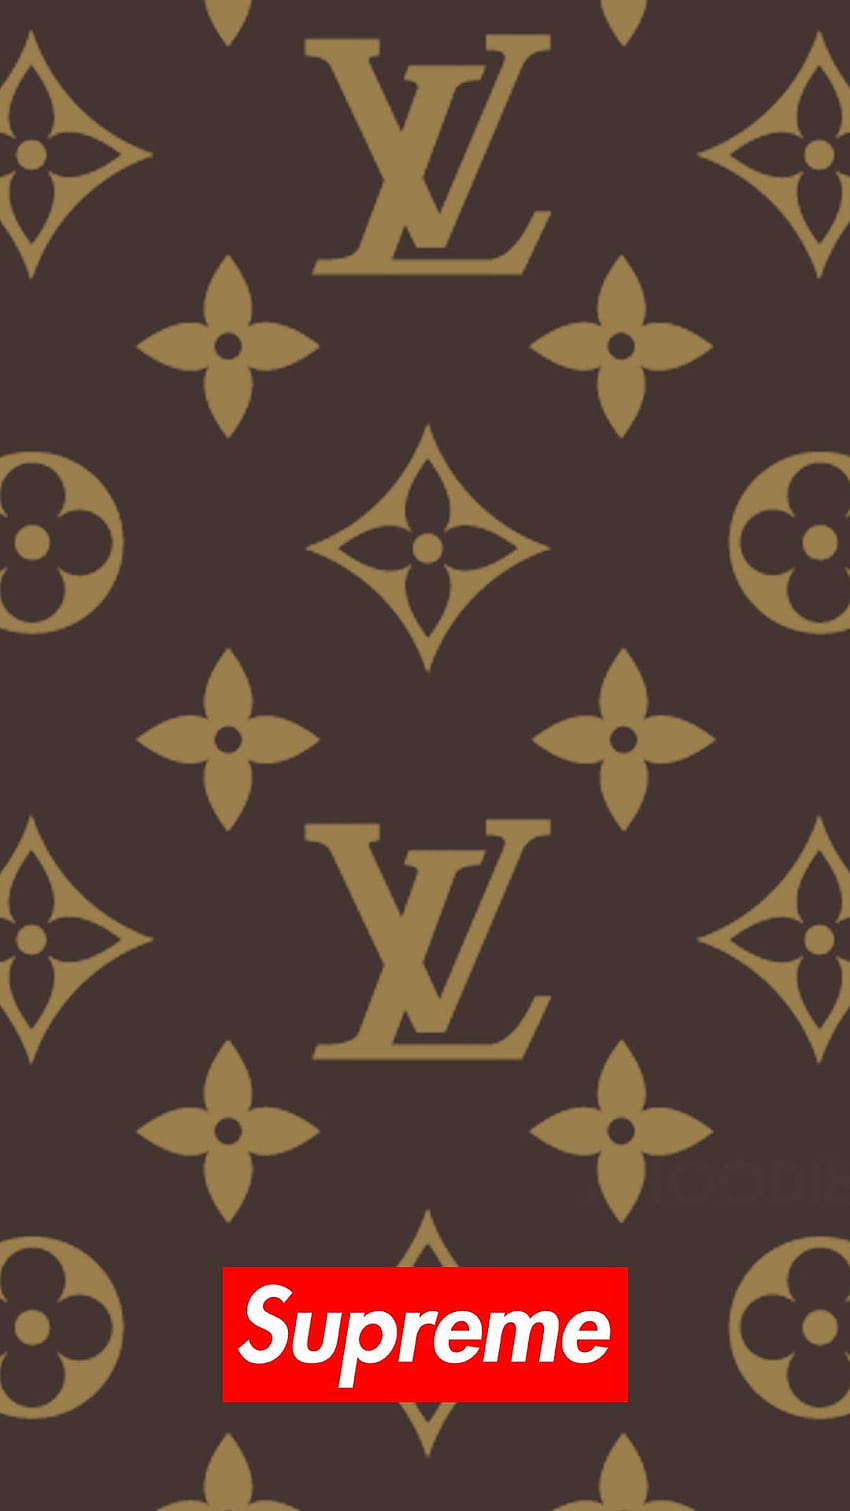 Louis Vuitton Free Printable Papers.  Sfondi iphone, Sfondi per iphone,  Sfondi carini